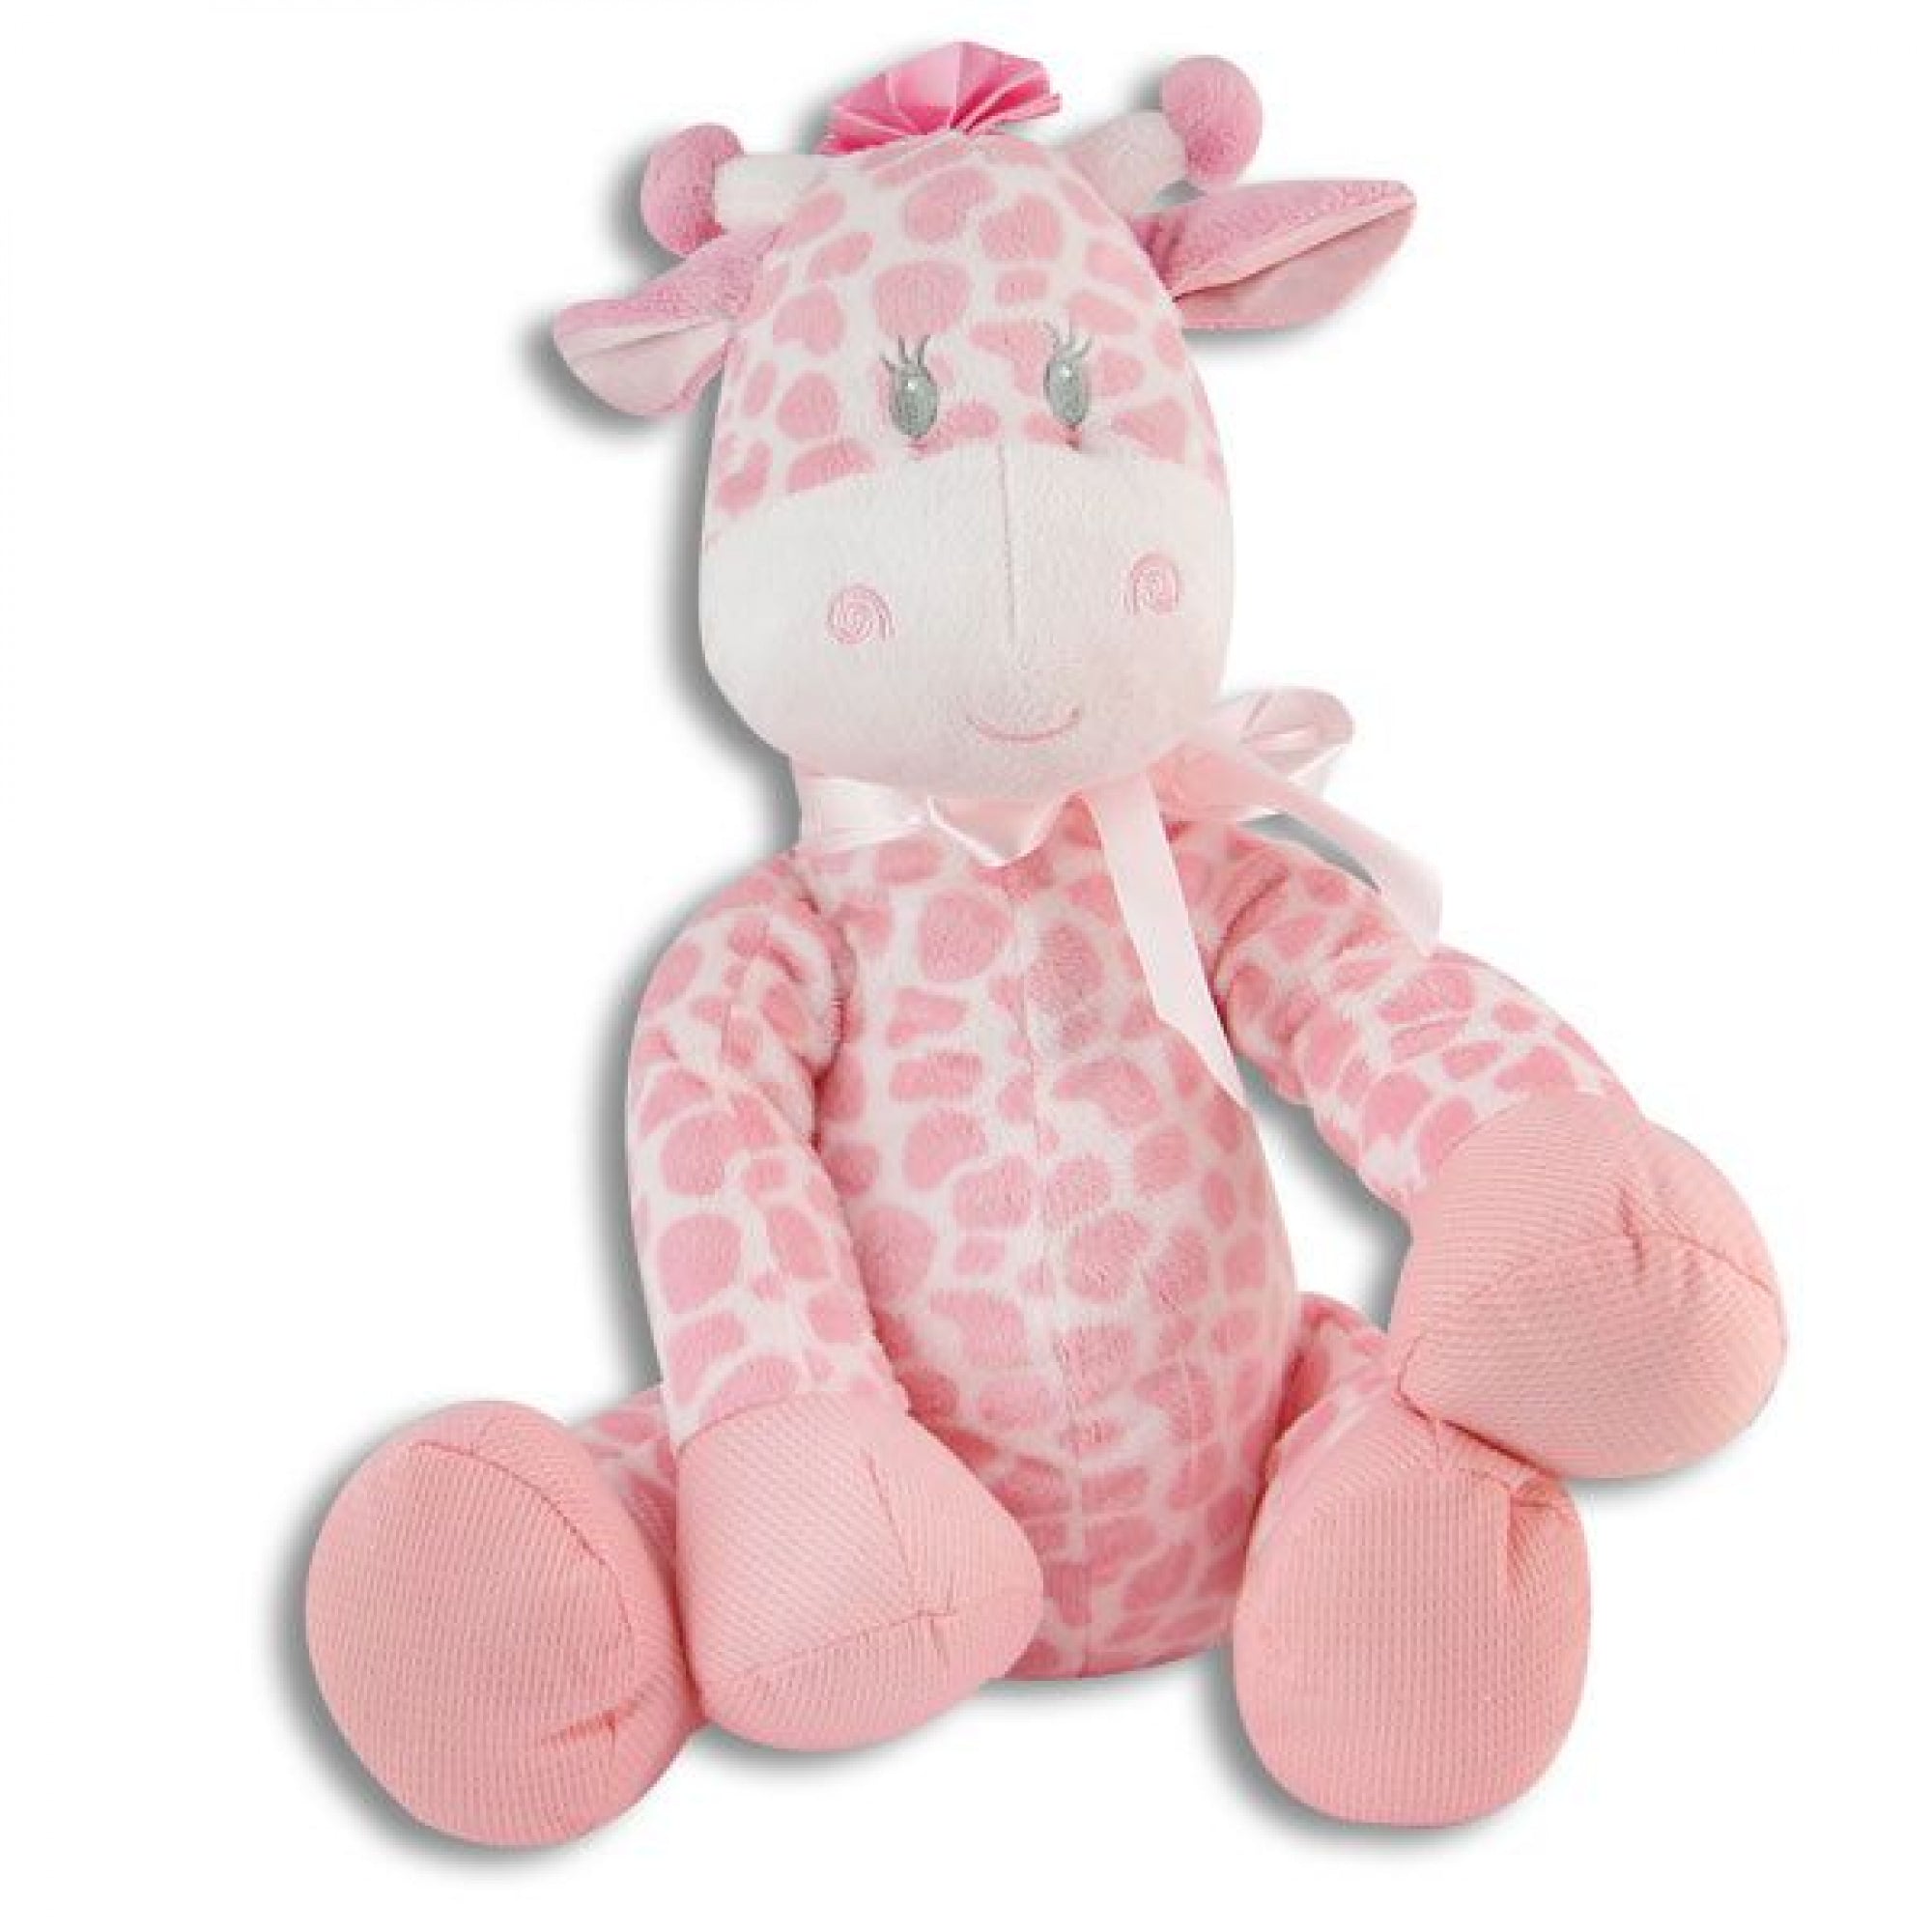 pink stuffed giraffe